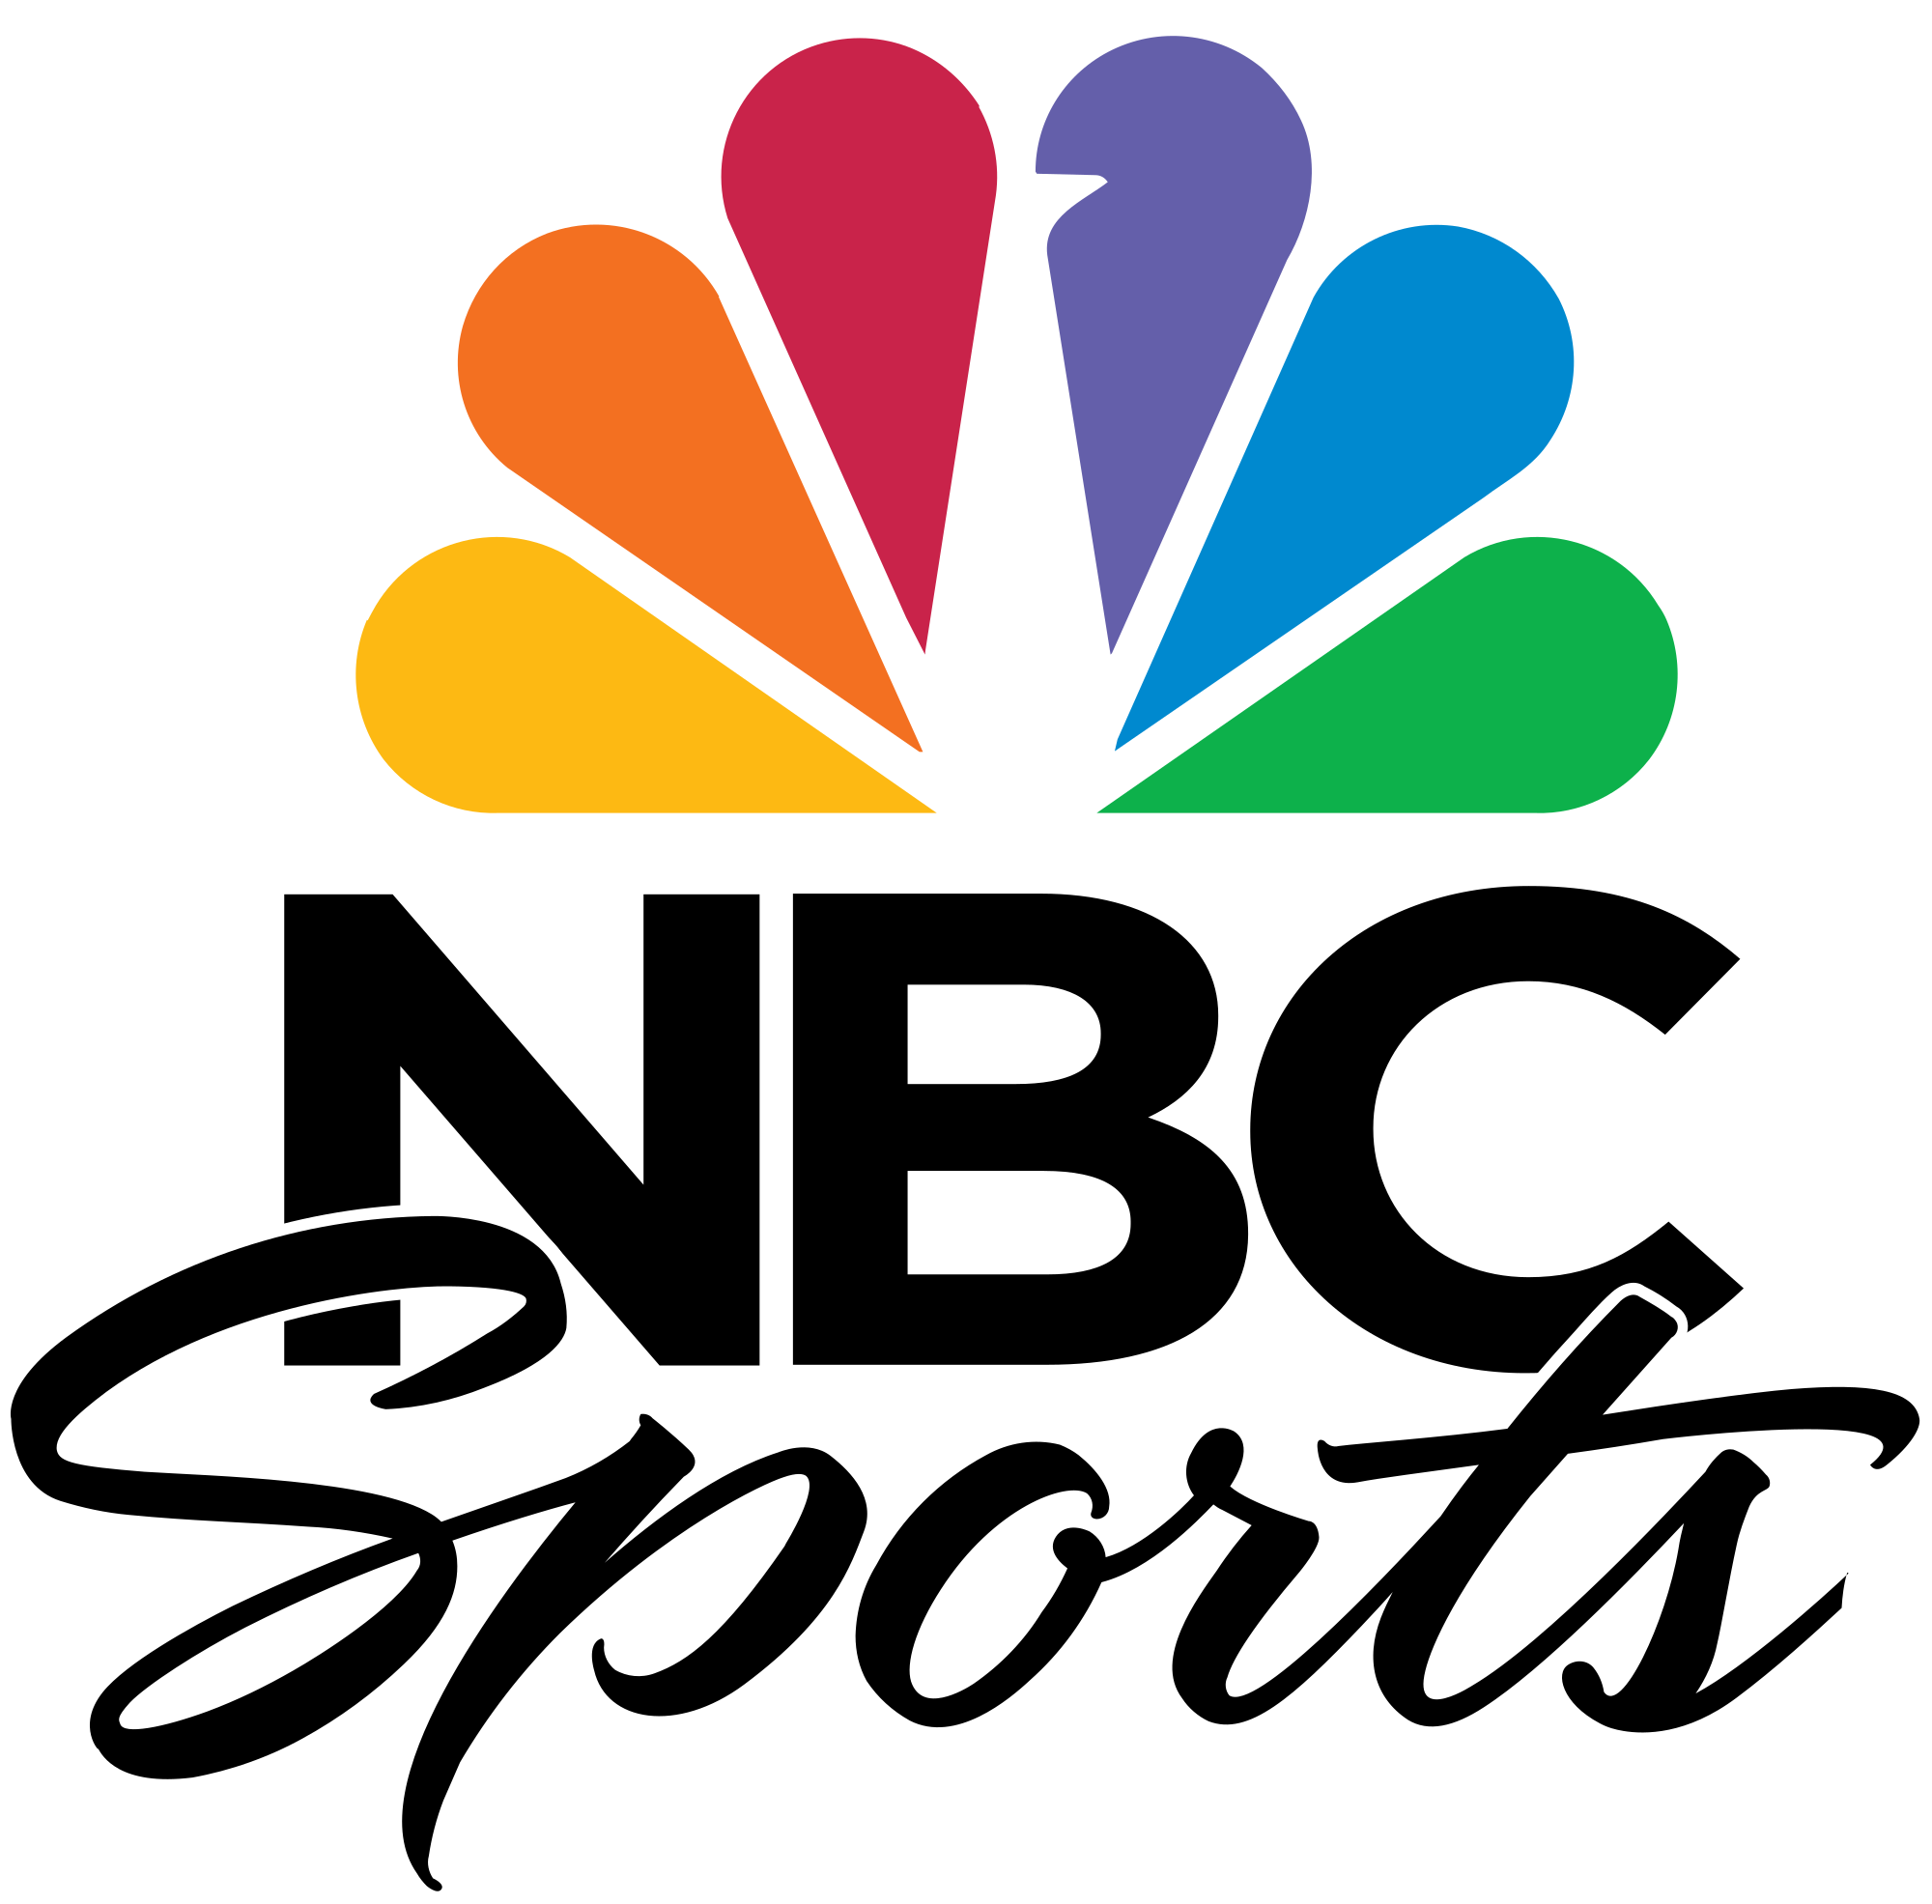 Batavia football team’s time to shine in NBC ‘Drive’